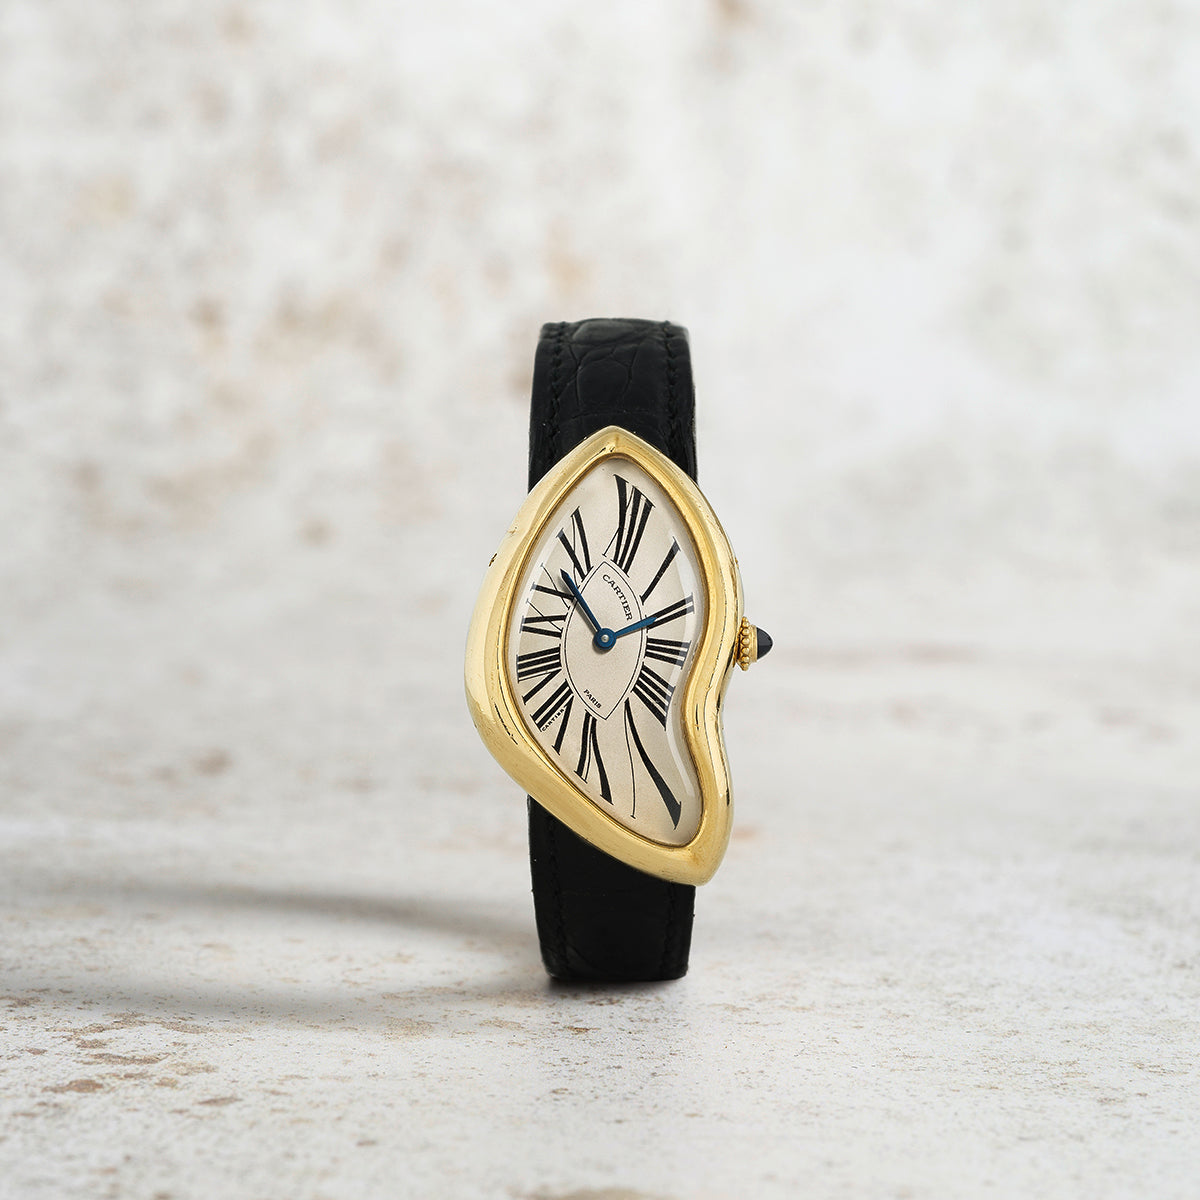 Cartier Crash wristwatch, 1991 Paris Boutique version and one of just 400 pieces sells for £216,300 including buyer’s premium. © Photo courtesy of Bonhams.